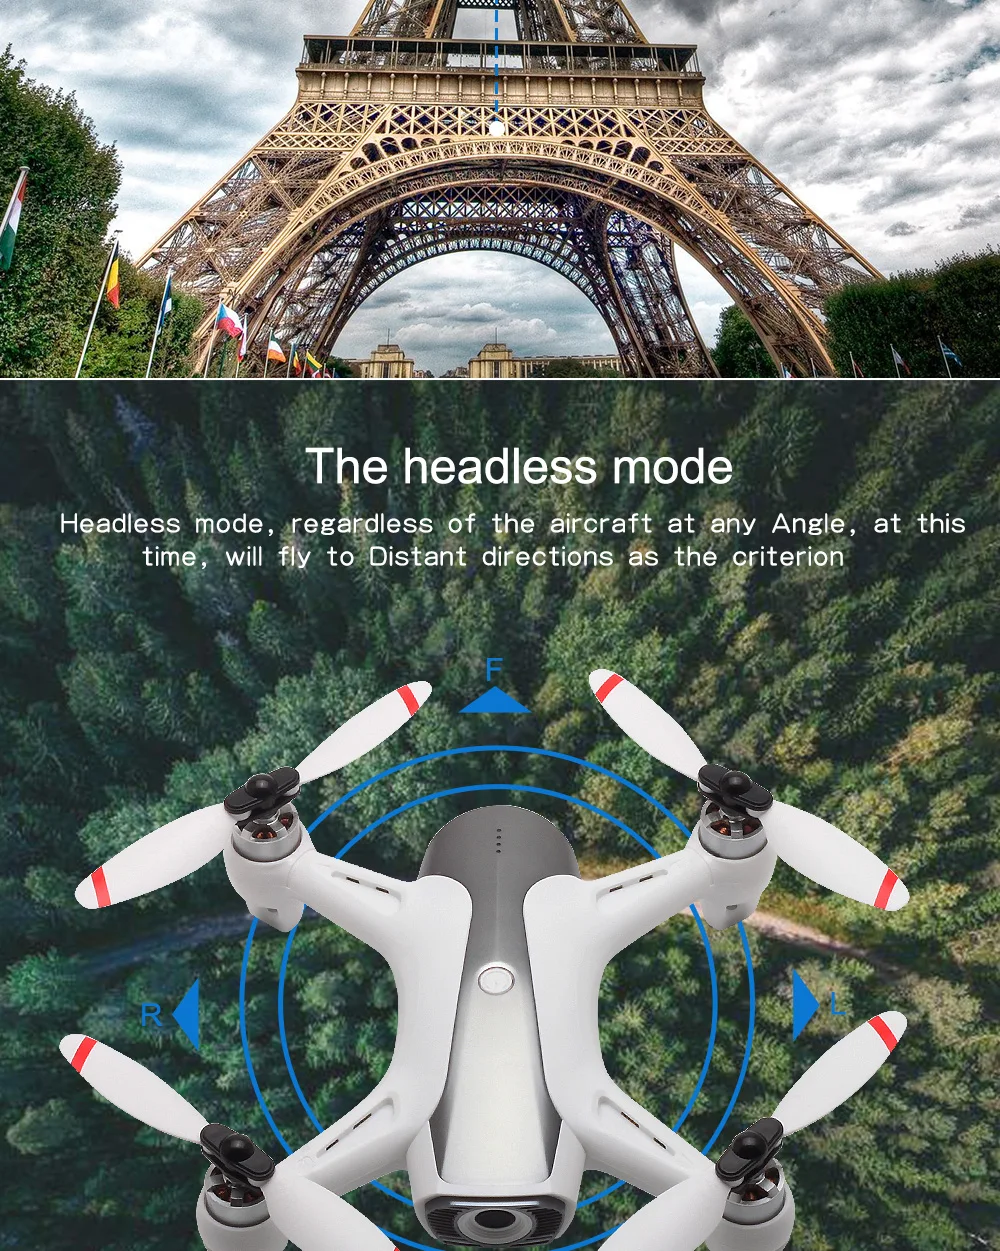 HOSHI-Dron Syma W1 con GPS, 5G, Wifi, 1080P, HD, cámara ajustable, Dron profesional